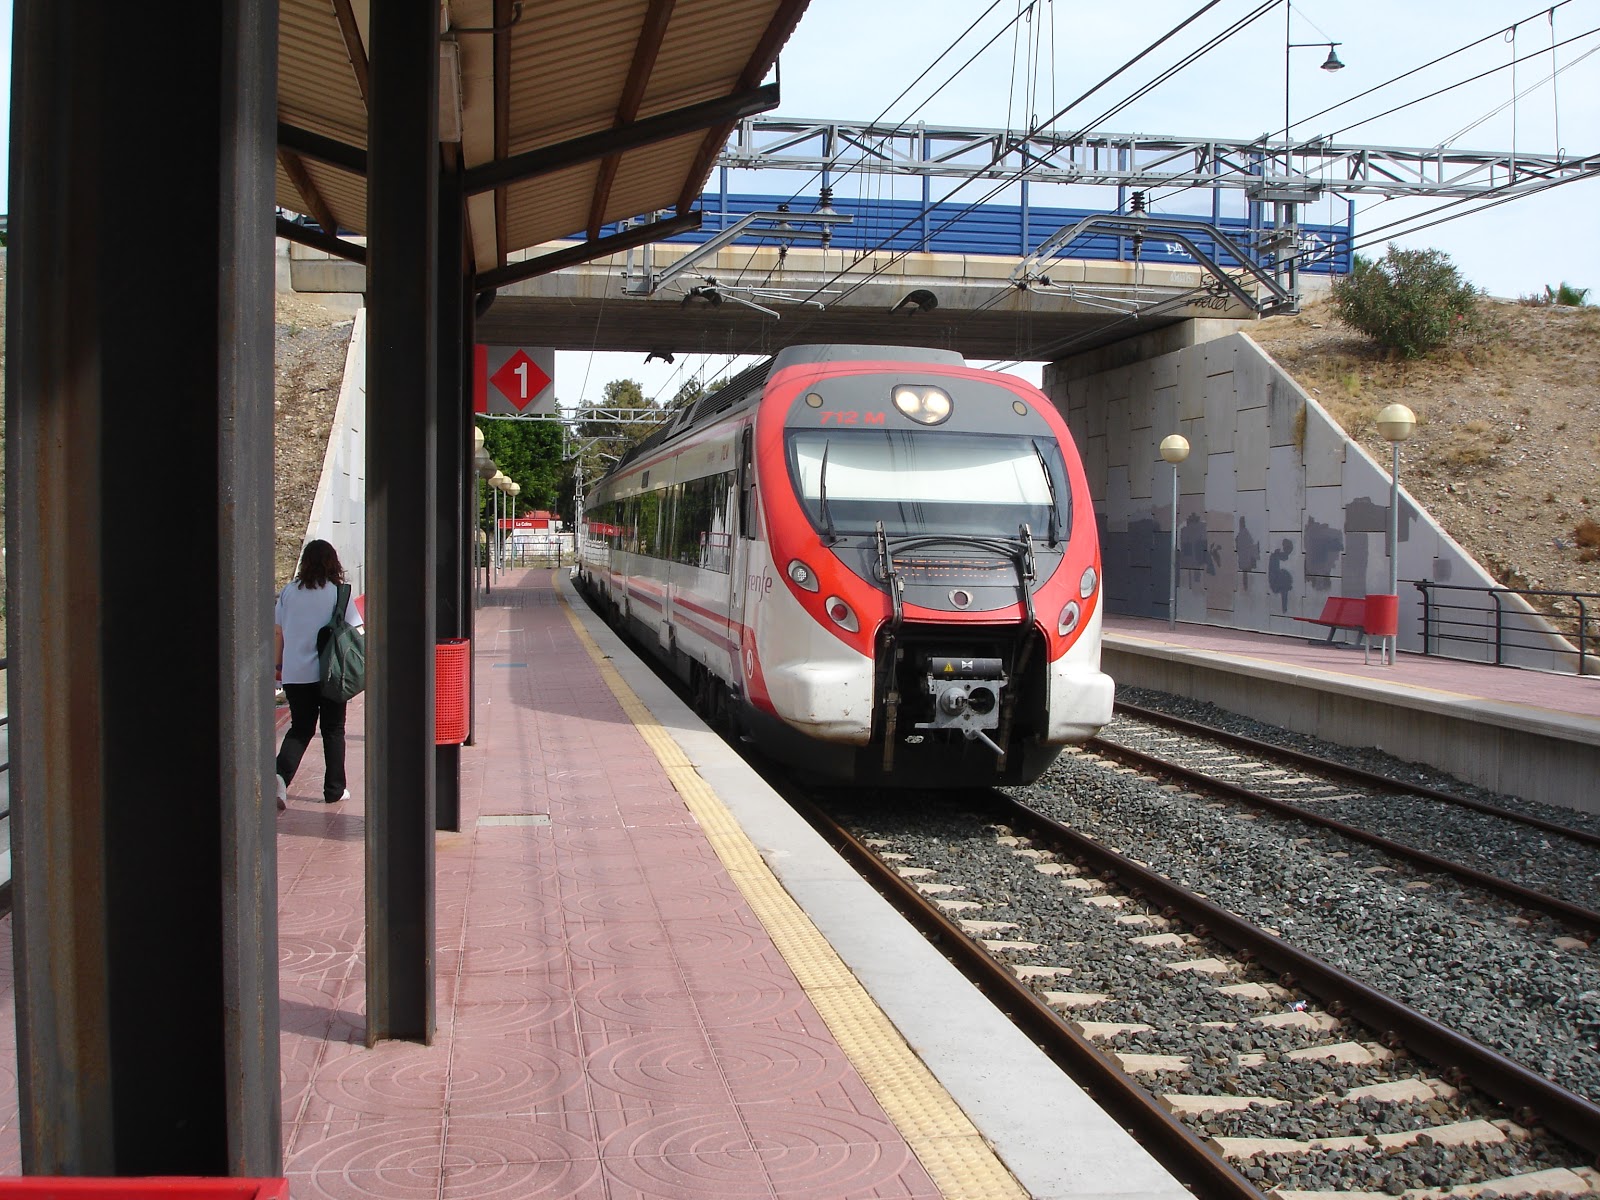 C1 train to Fuengirola